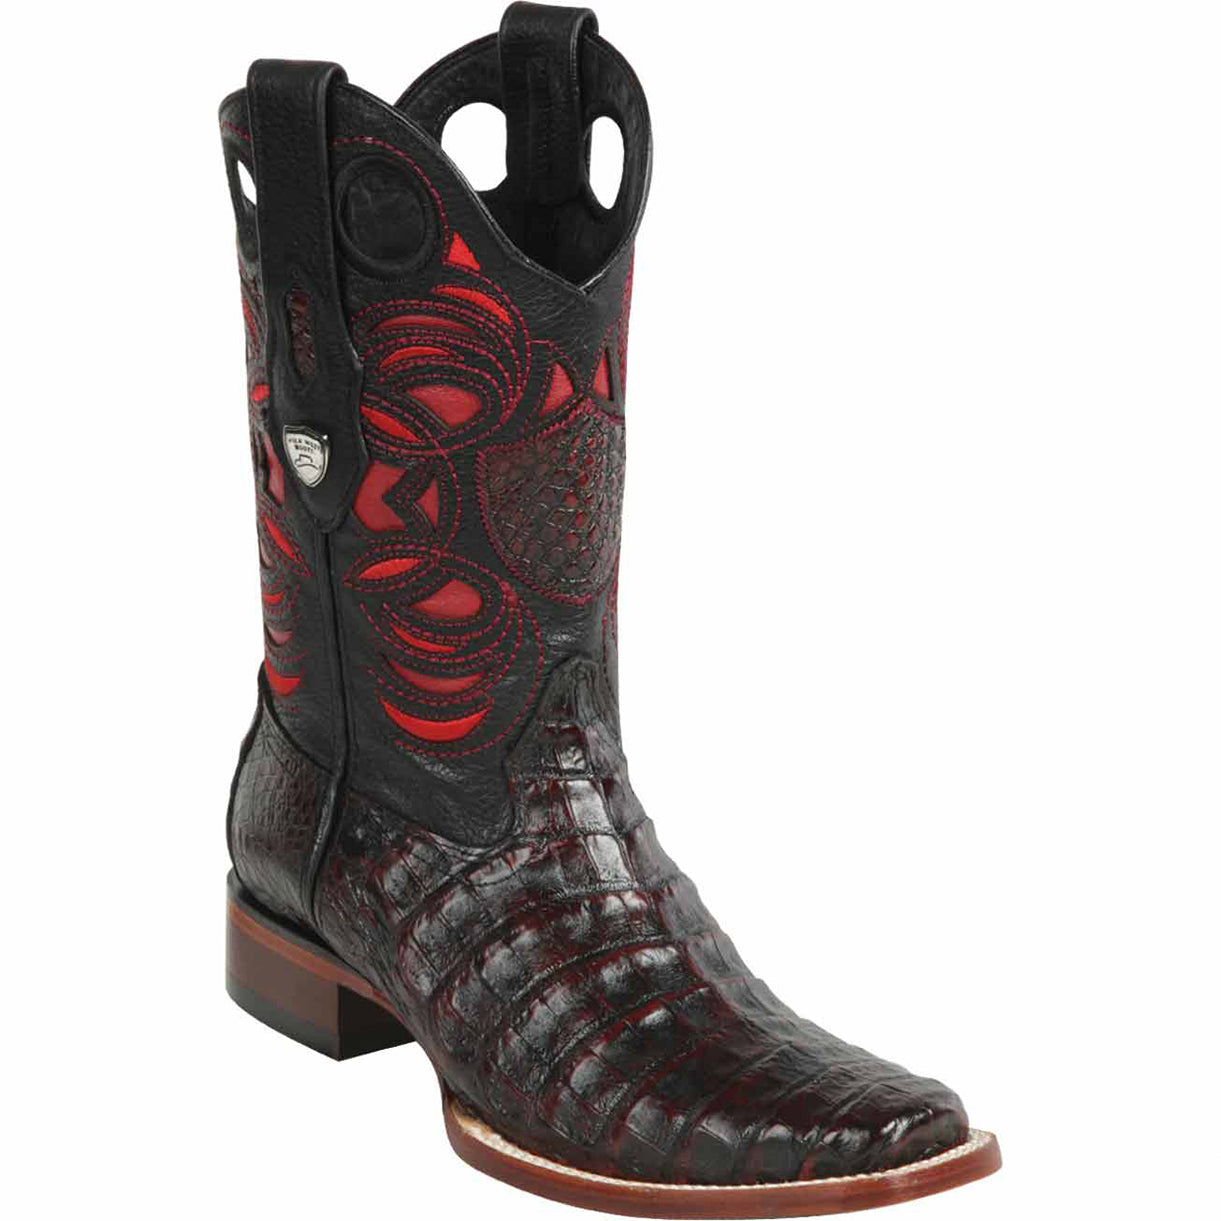 Black cherry caiman square toe boots